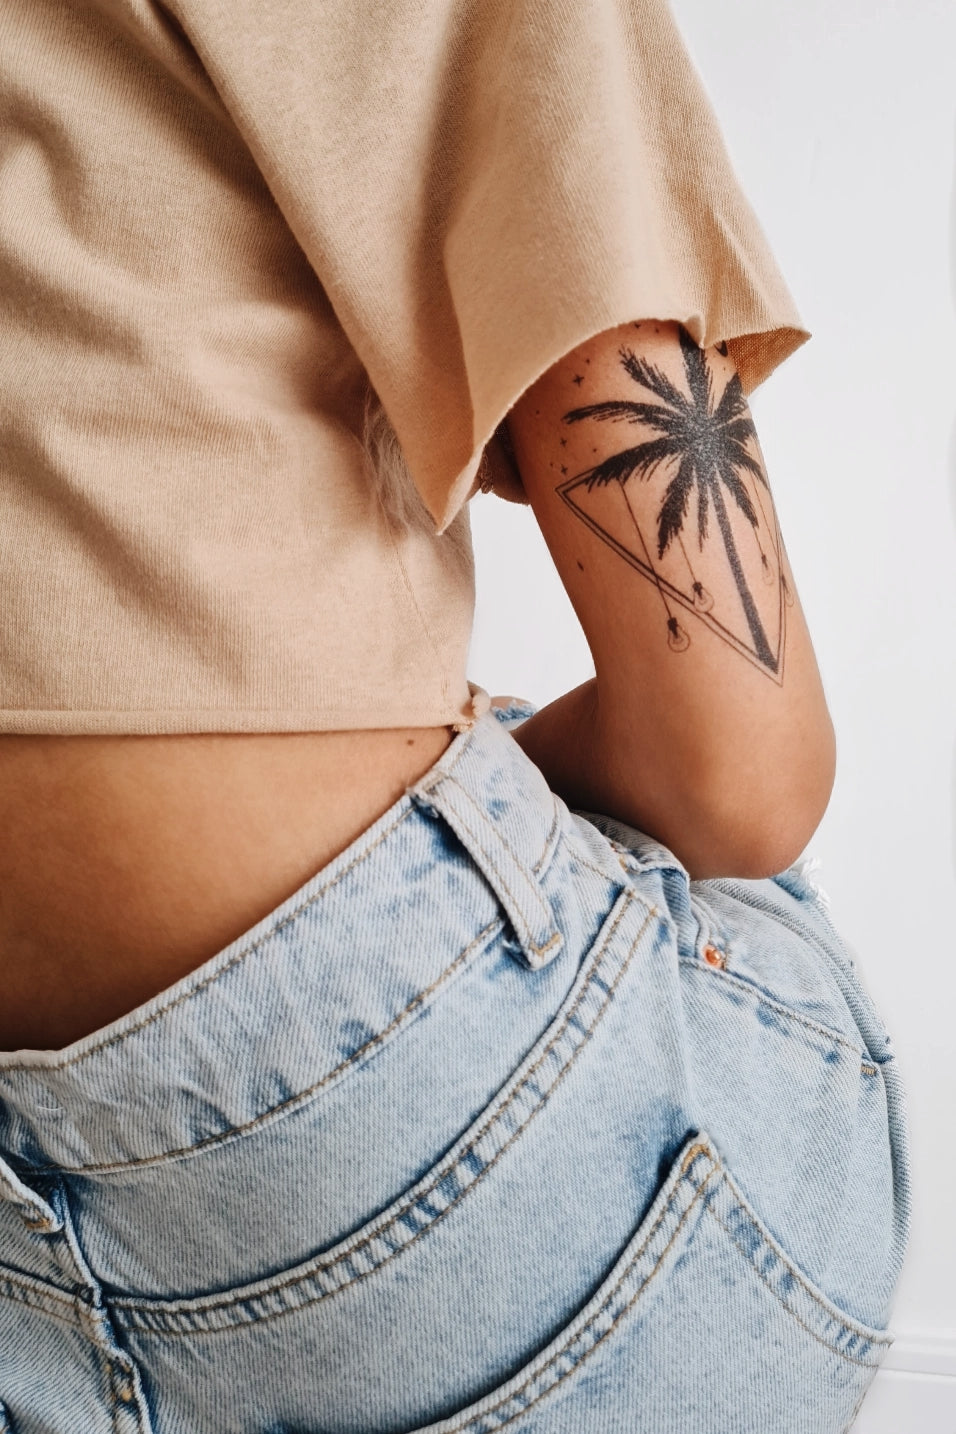 Palm tree tattoo #palmtree #palmtreetattoo #skinbling #pandptattooboracay | Palm  tattoos, Small tattoos, Leg tattoos